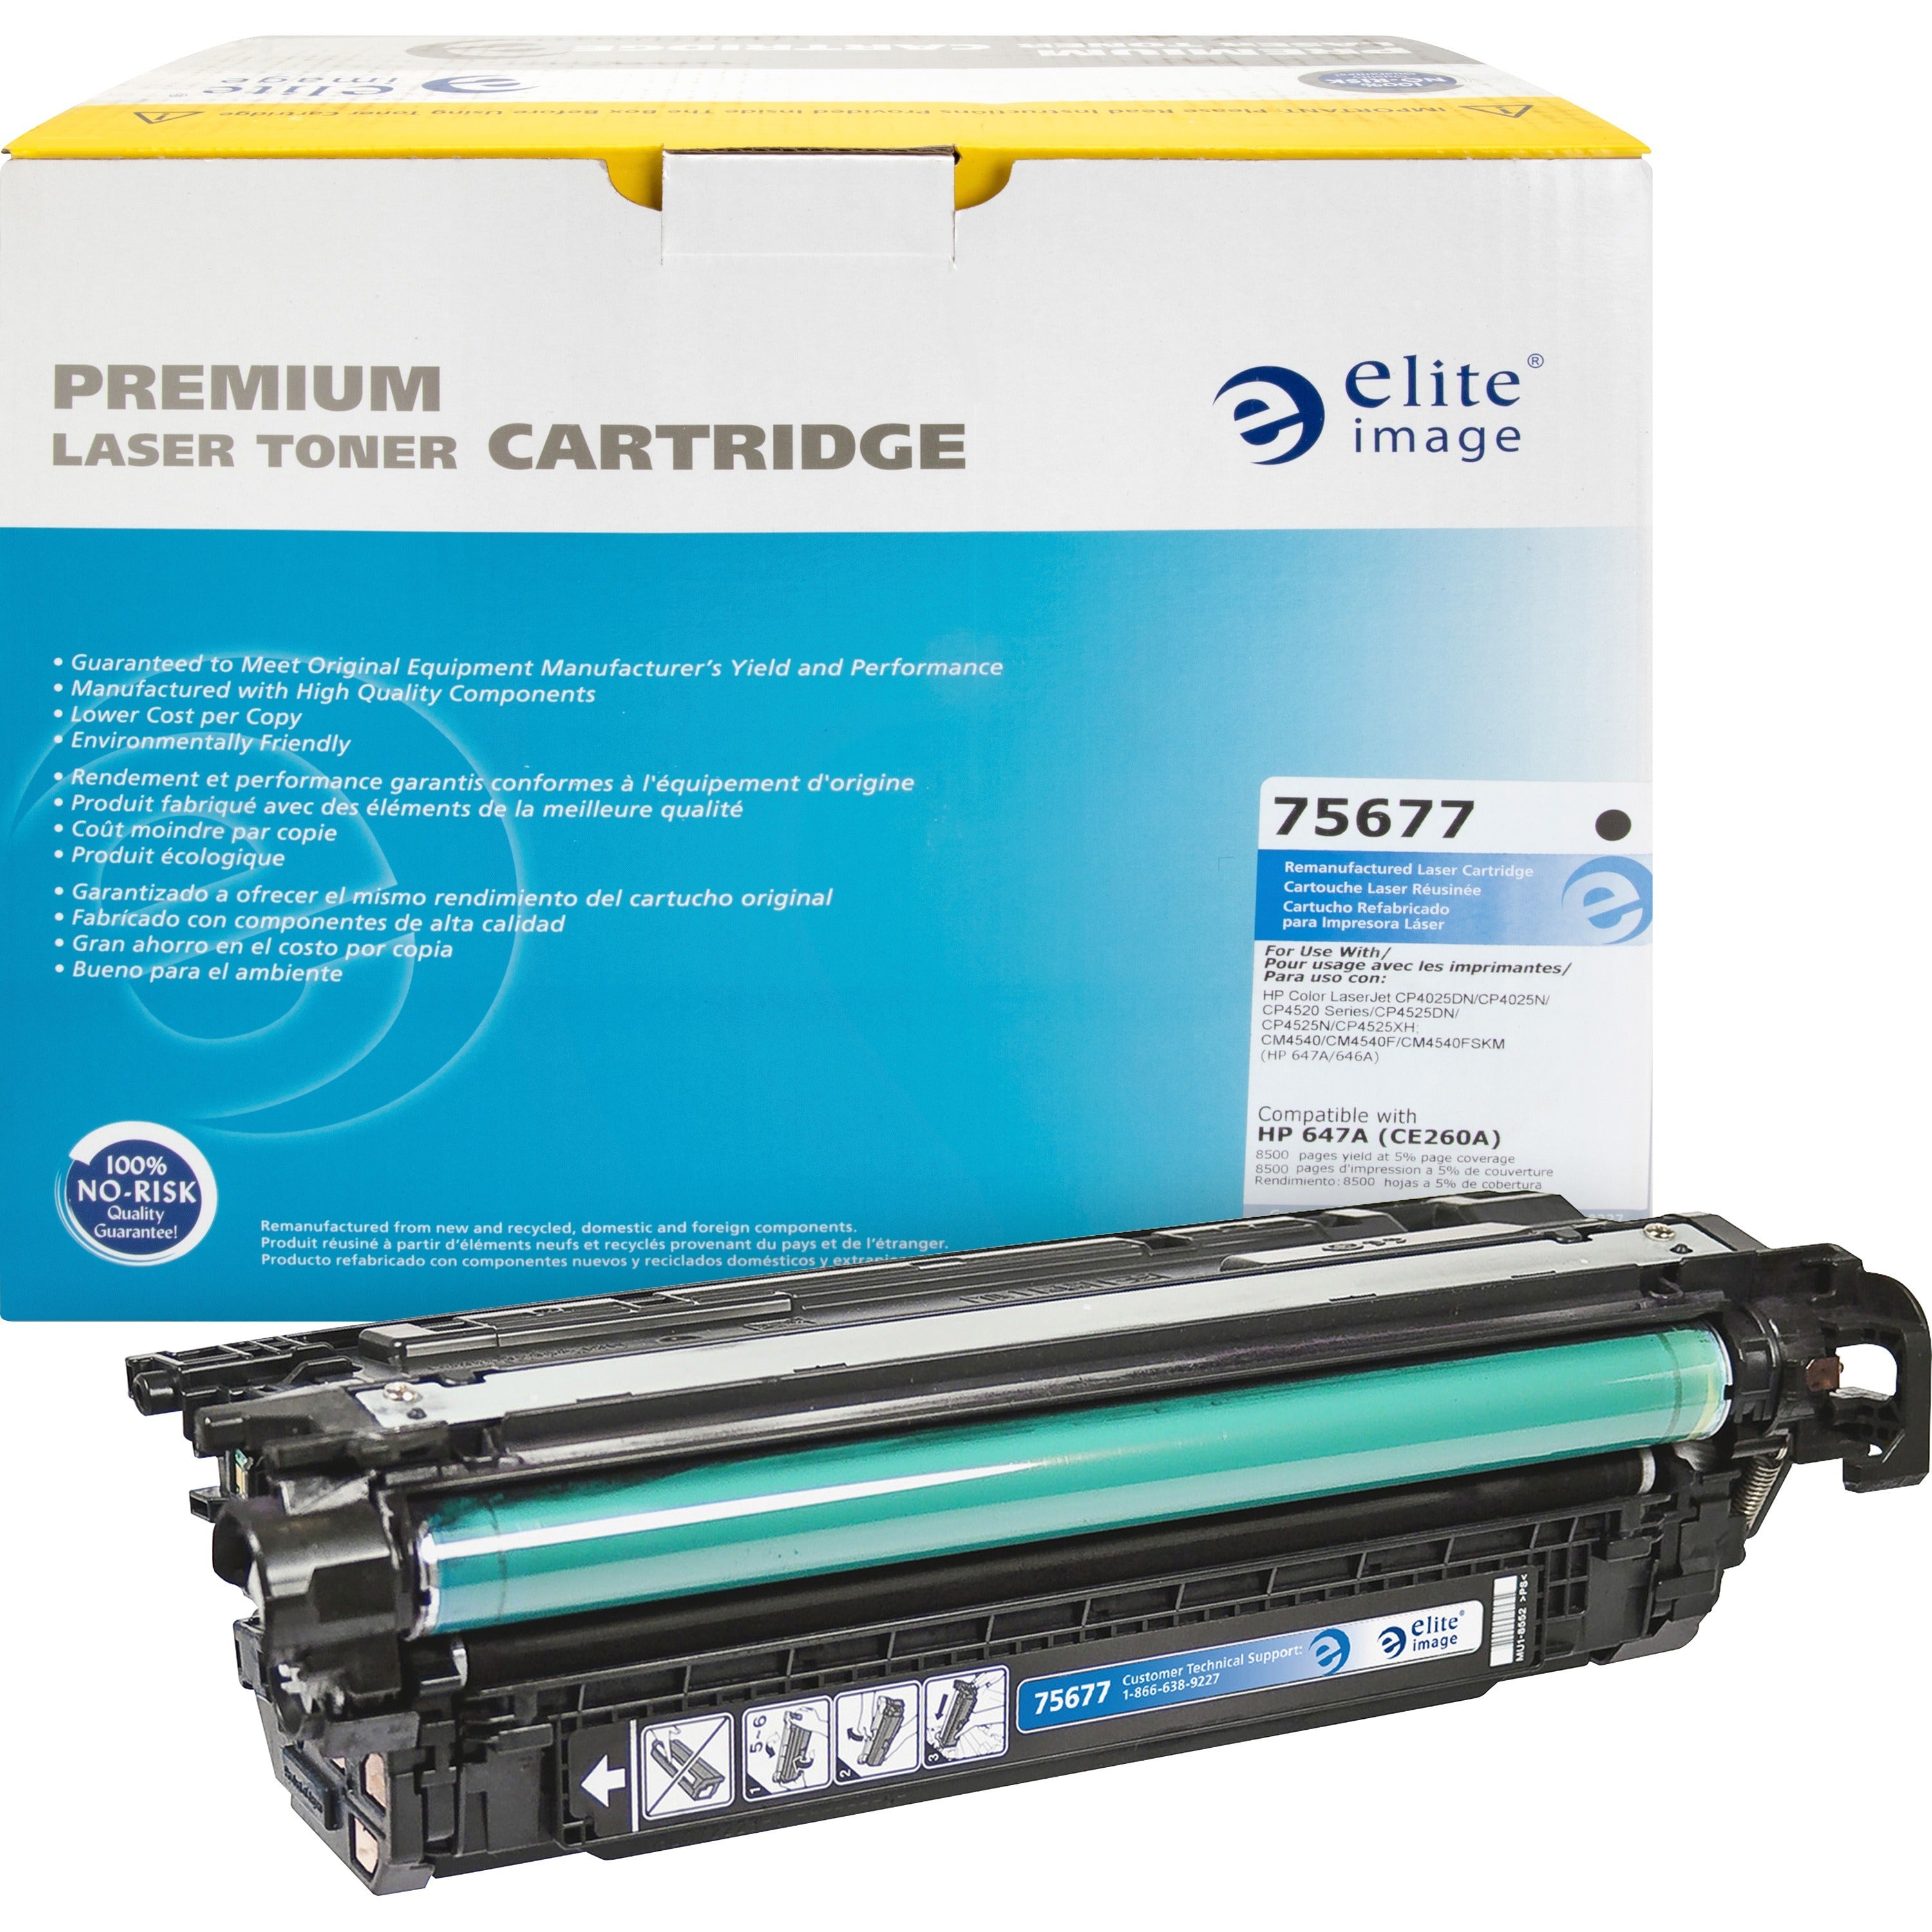 Elite Image Remanufactured Laser Toner Cartridge - Alternative for HP 647A (CE260A) - Black - 1 Each - 8500 Pages - 1